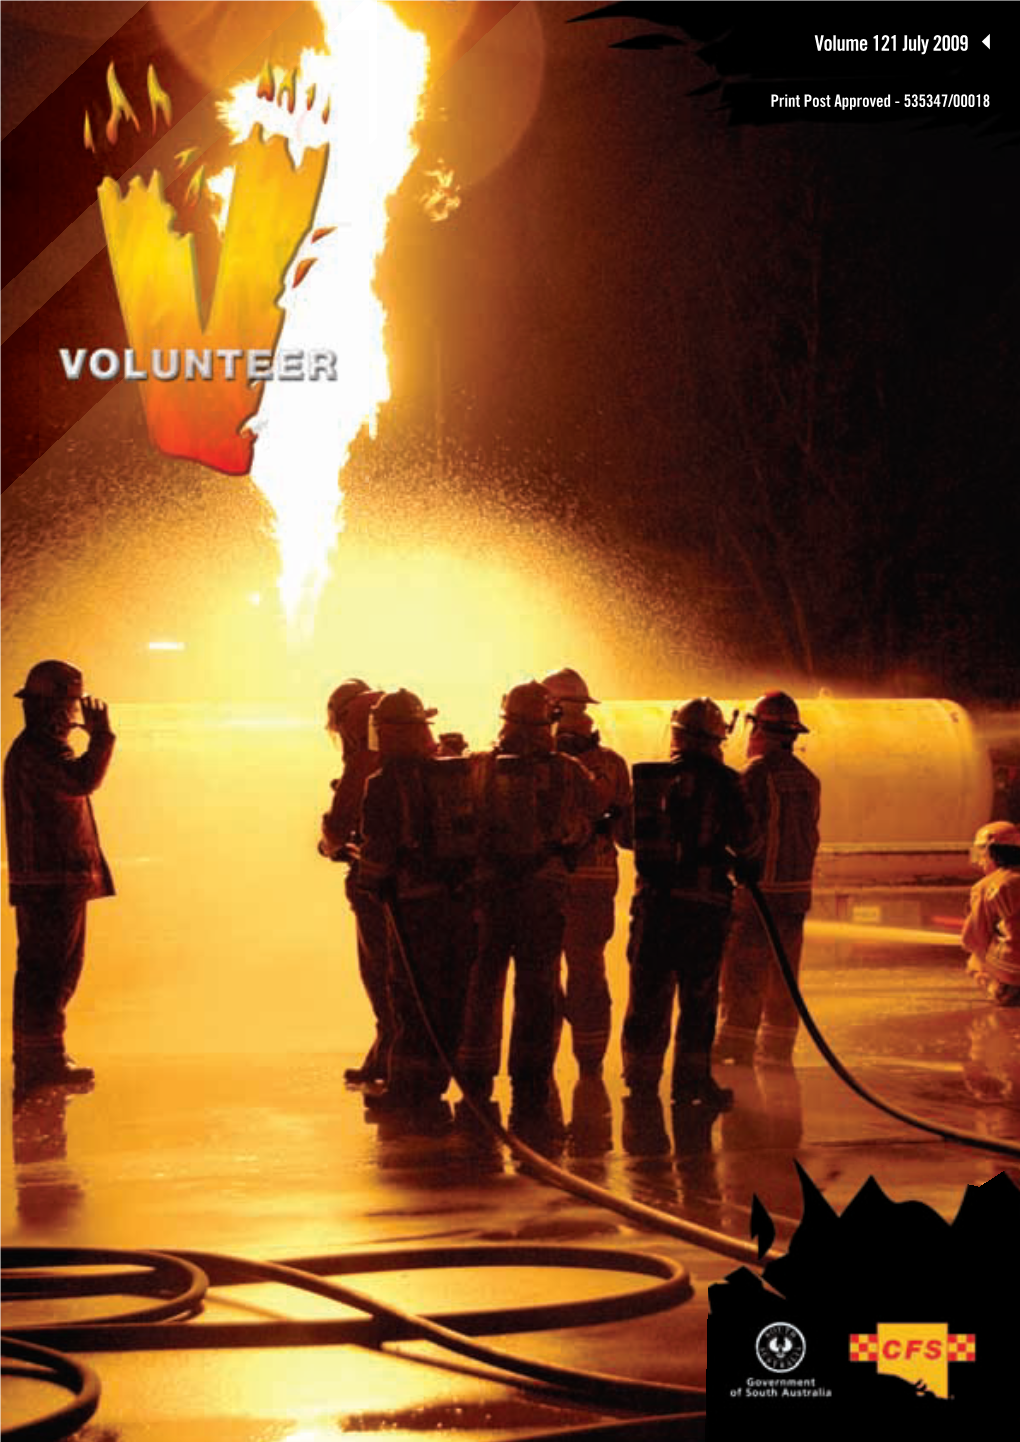 Volume 121 July 2009